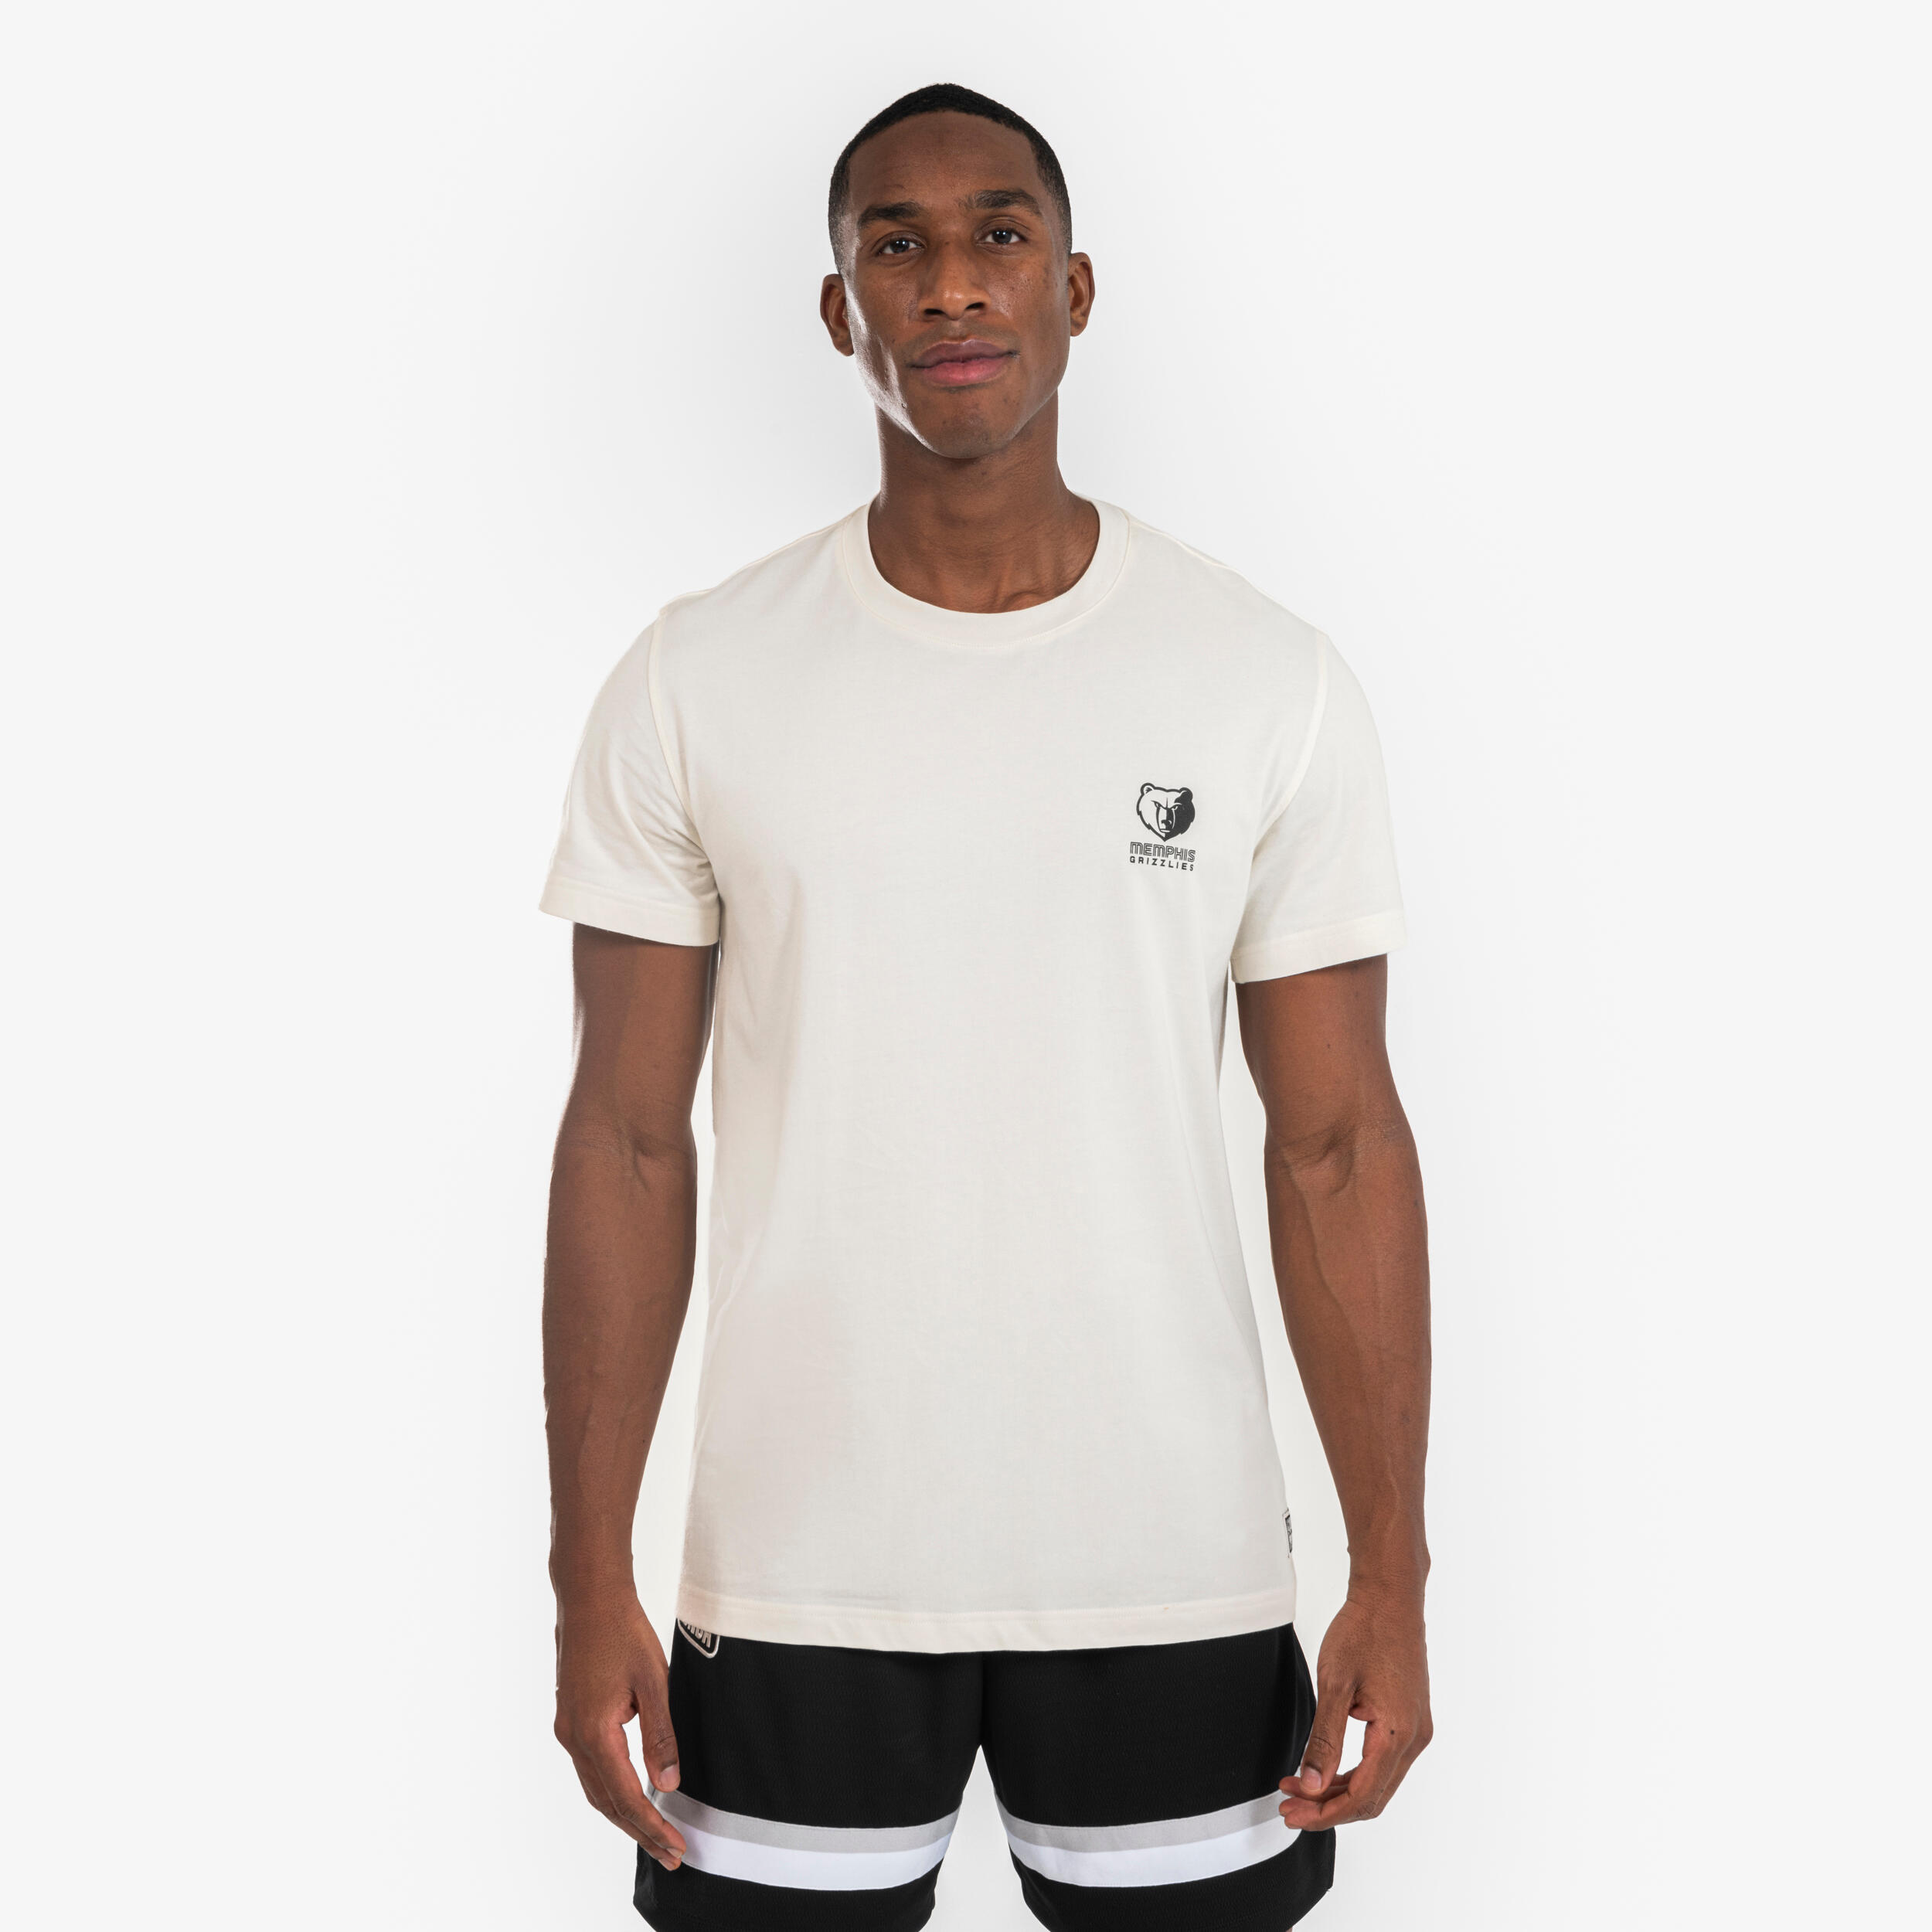 Unisex Basketball T-Shirt 900 AD - NBA Grizzlies/White 3/8